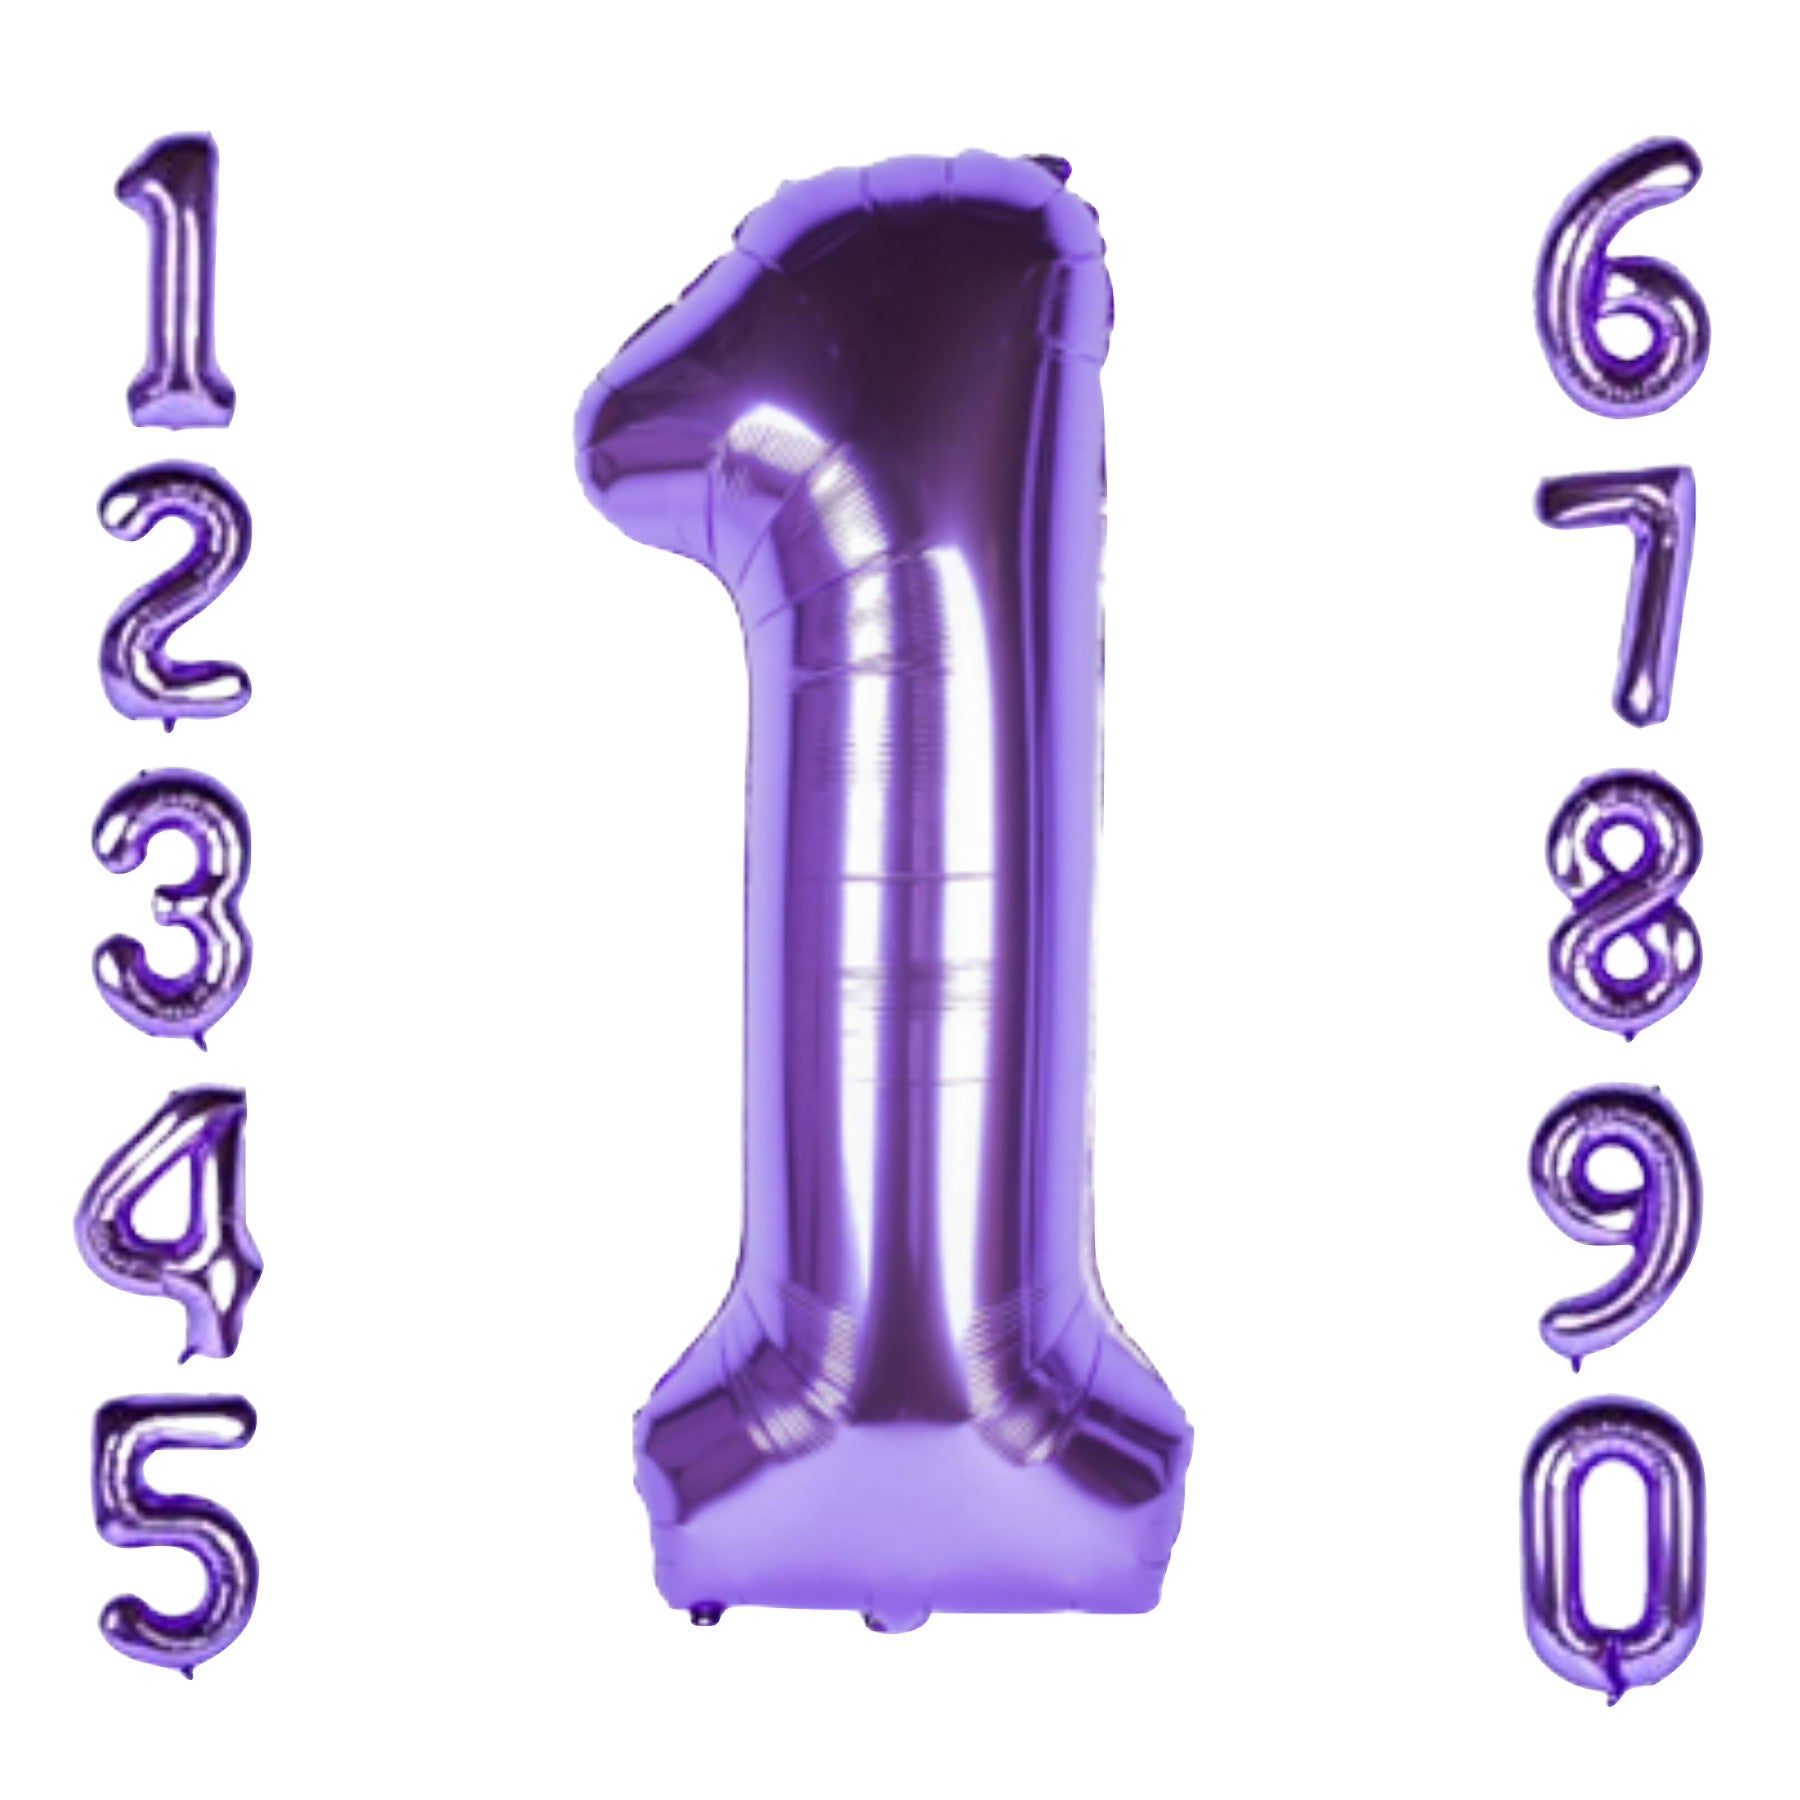 Partykarton "Prinzessin Violett" 55 Teile - Party im Karton